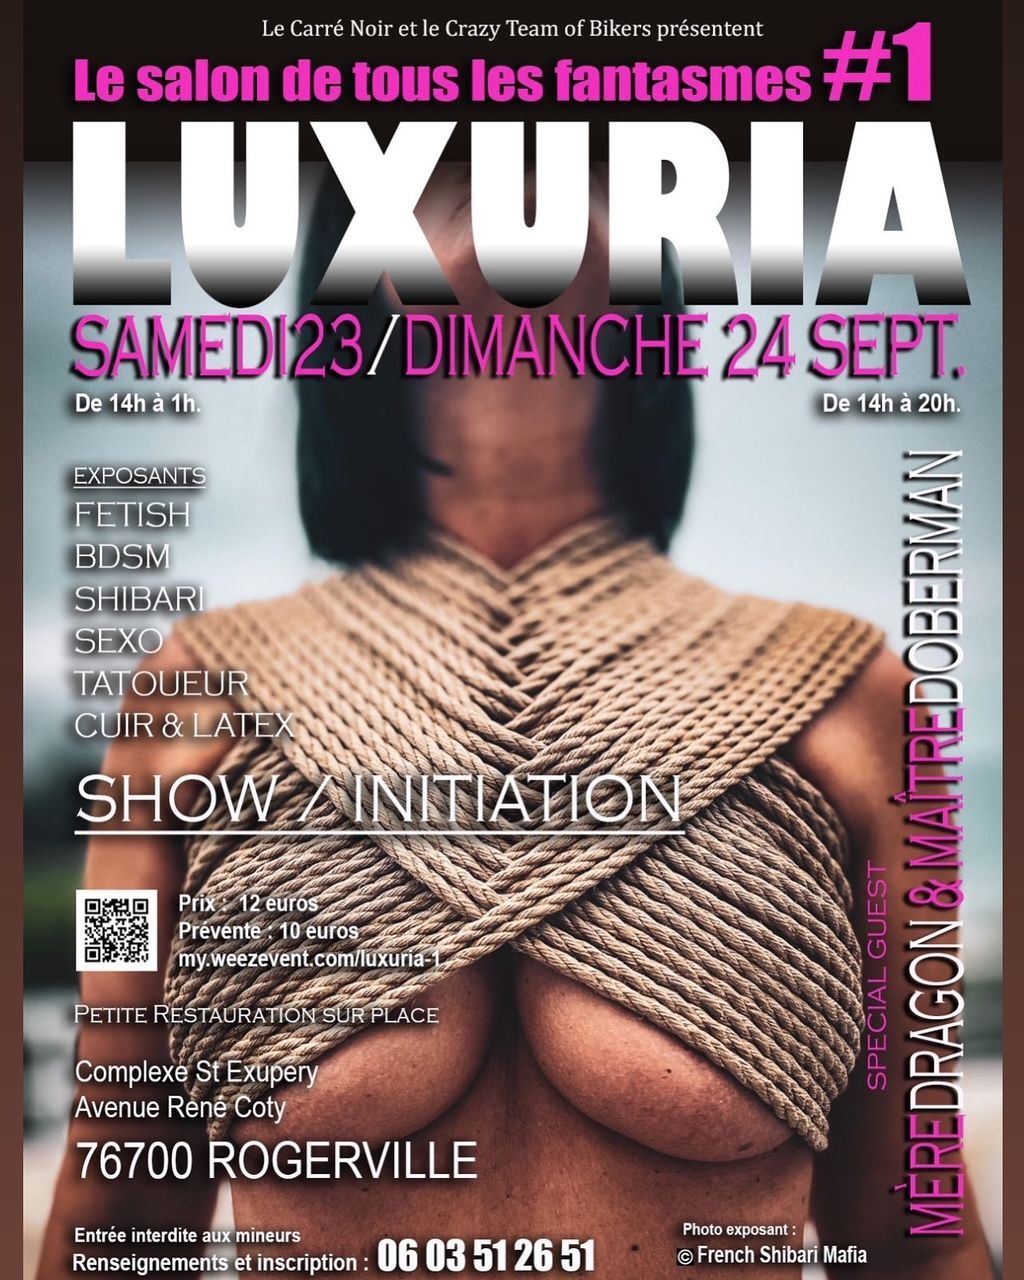 Show, Spectacle, performer Shibari hwg-Paris